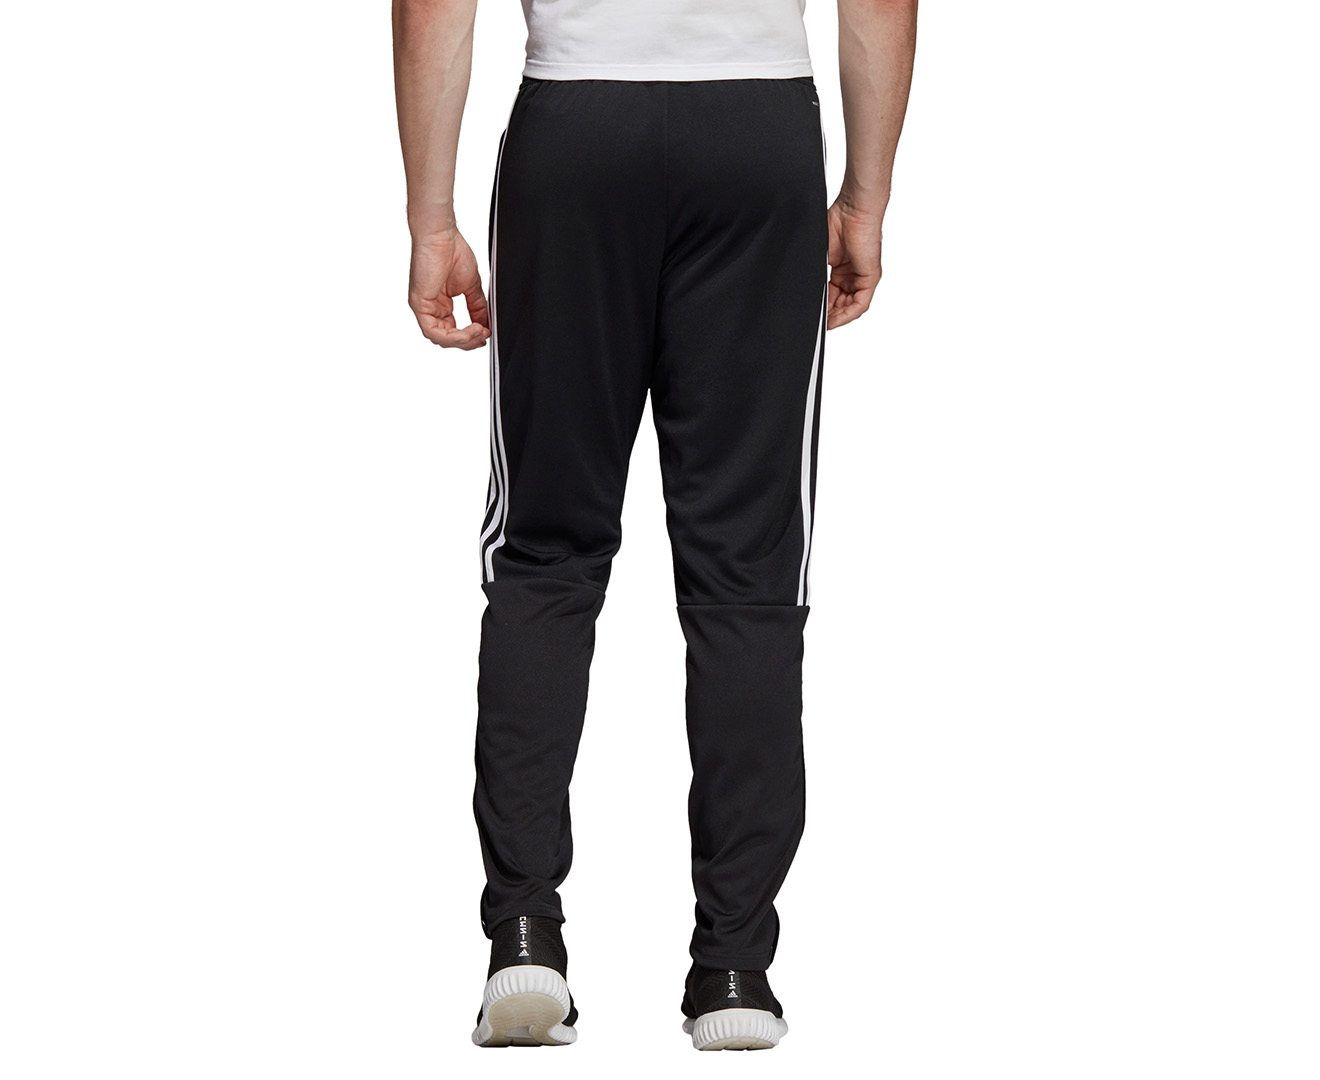 Adidas Men's Sereno 19 Training Pant - Black/White | Catch.com.au